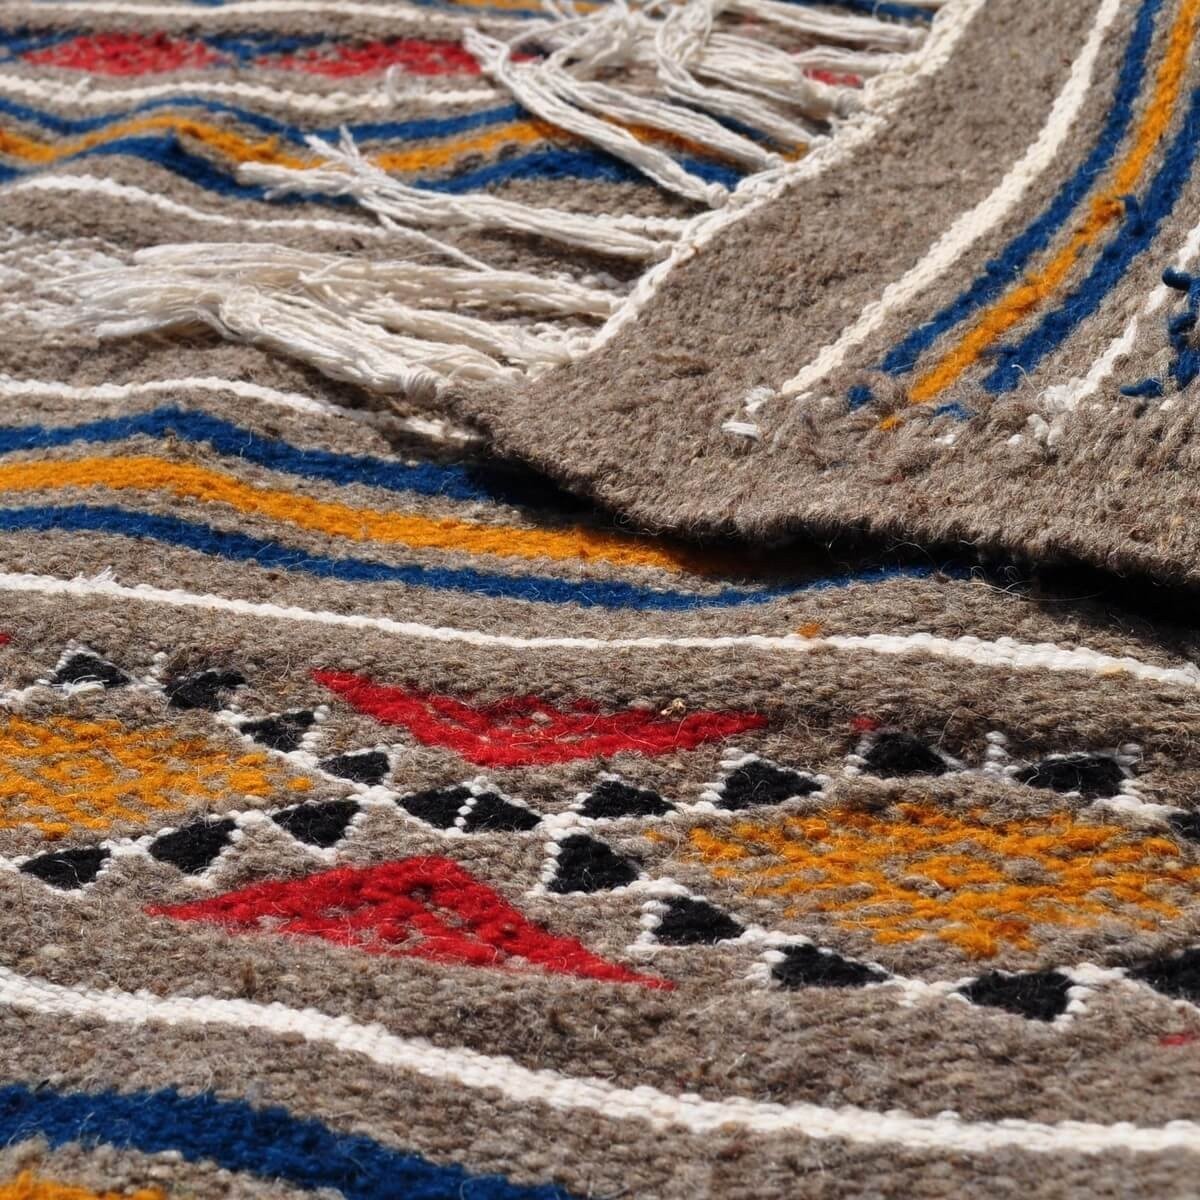 Tapete berbere Tapete Kilim El Bey 145x255 Cinza/Vermelho/Azul/Amarelo (Tecidos à mão, Lã) Tapete tunisiano kilim, estilo marroq